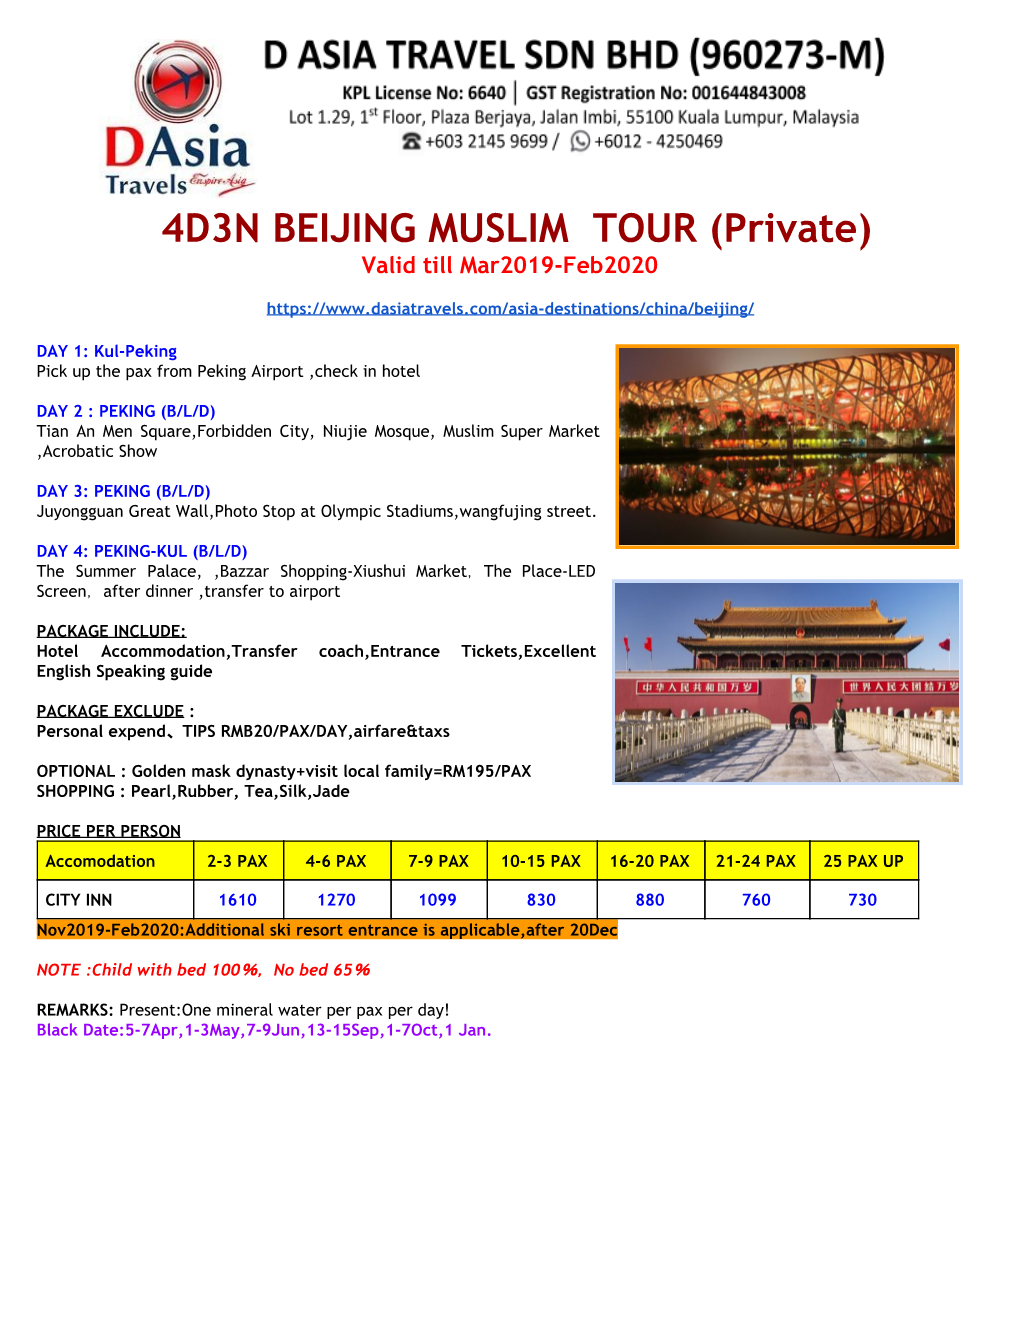 4D3N BEIJING MUSLIM TOUR (Private) Valid Till Mar2019-Feb2020